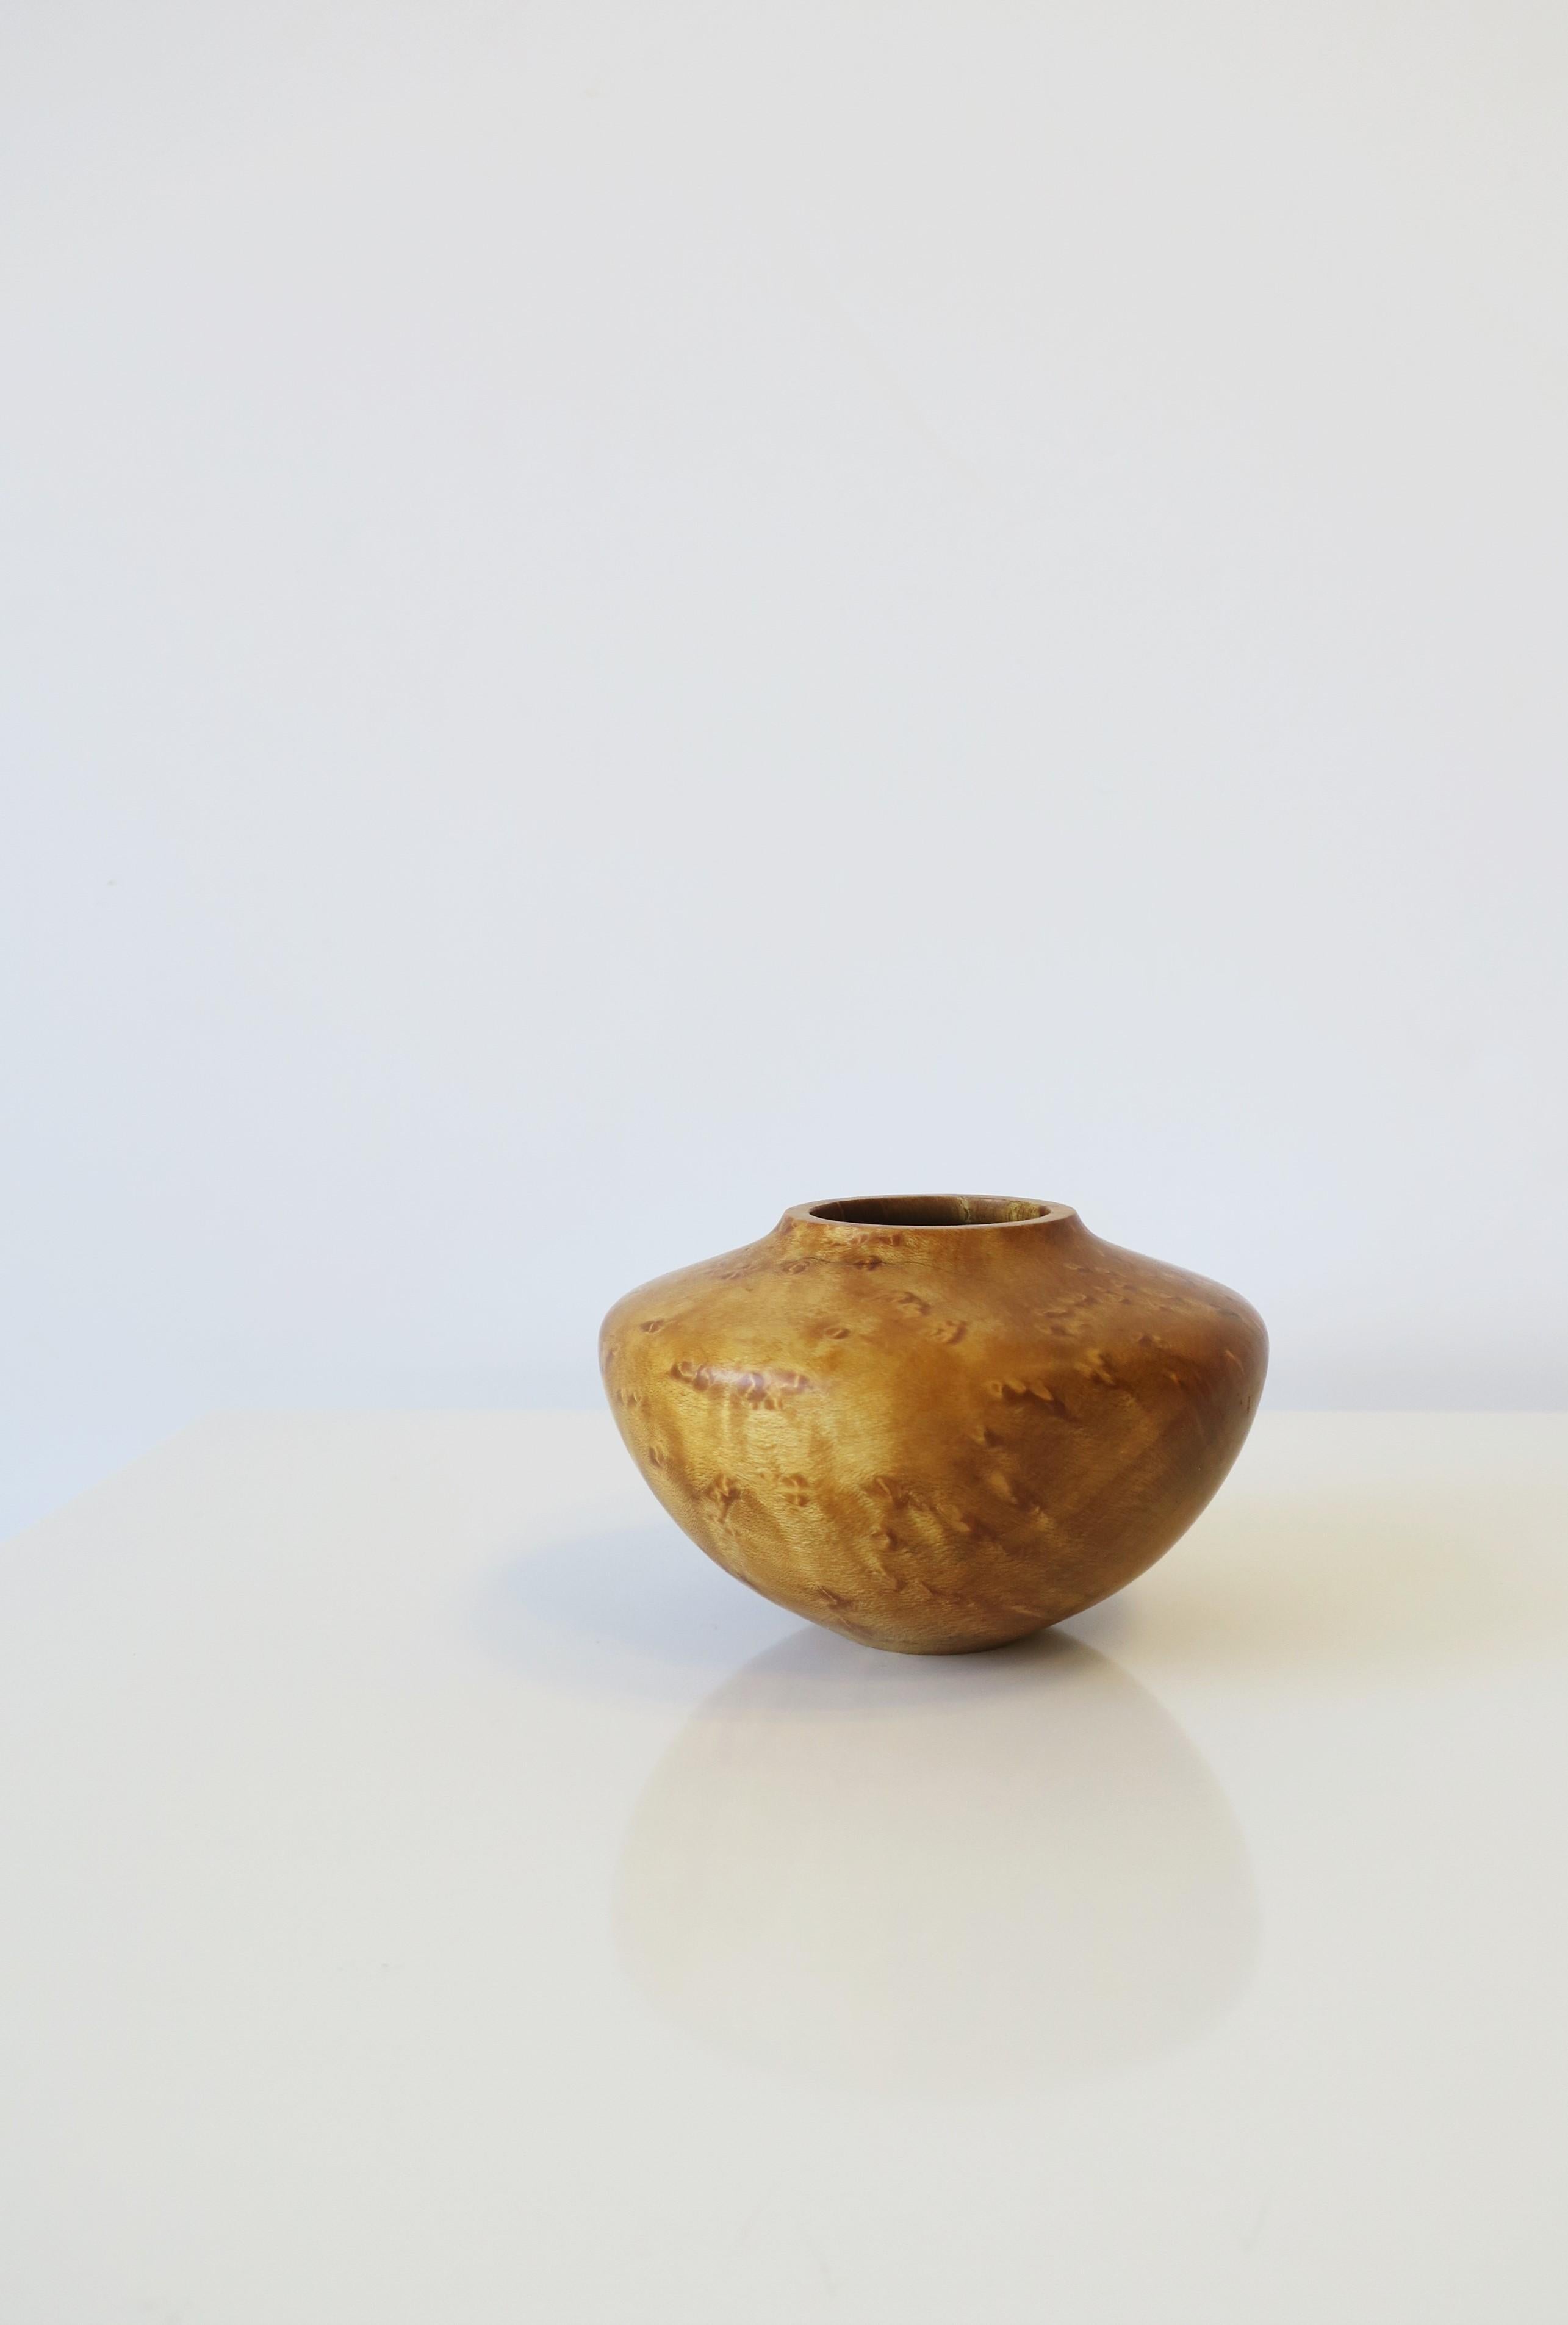 Studio Natural Birdseye Maple Wood Urn Vase Signed 2